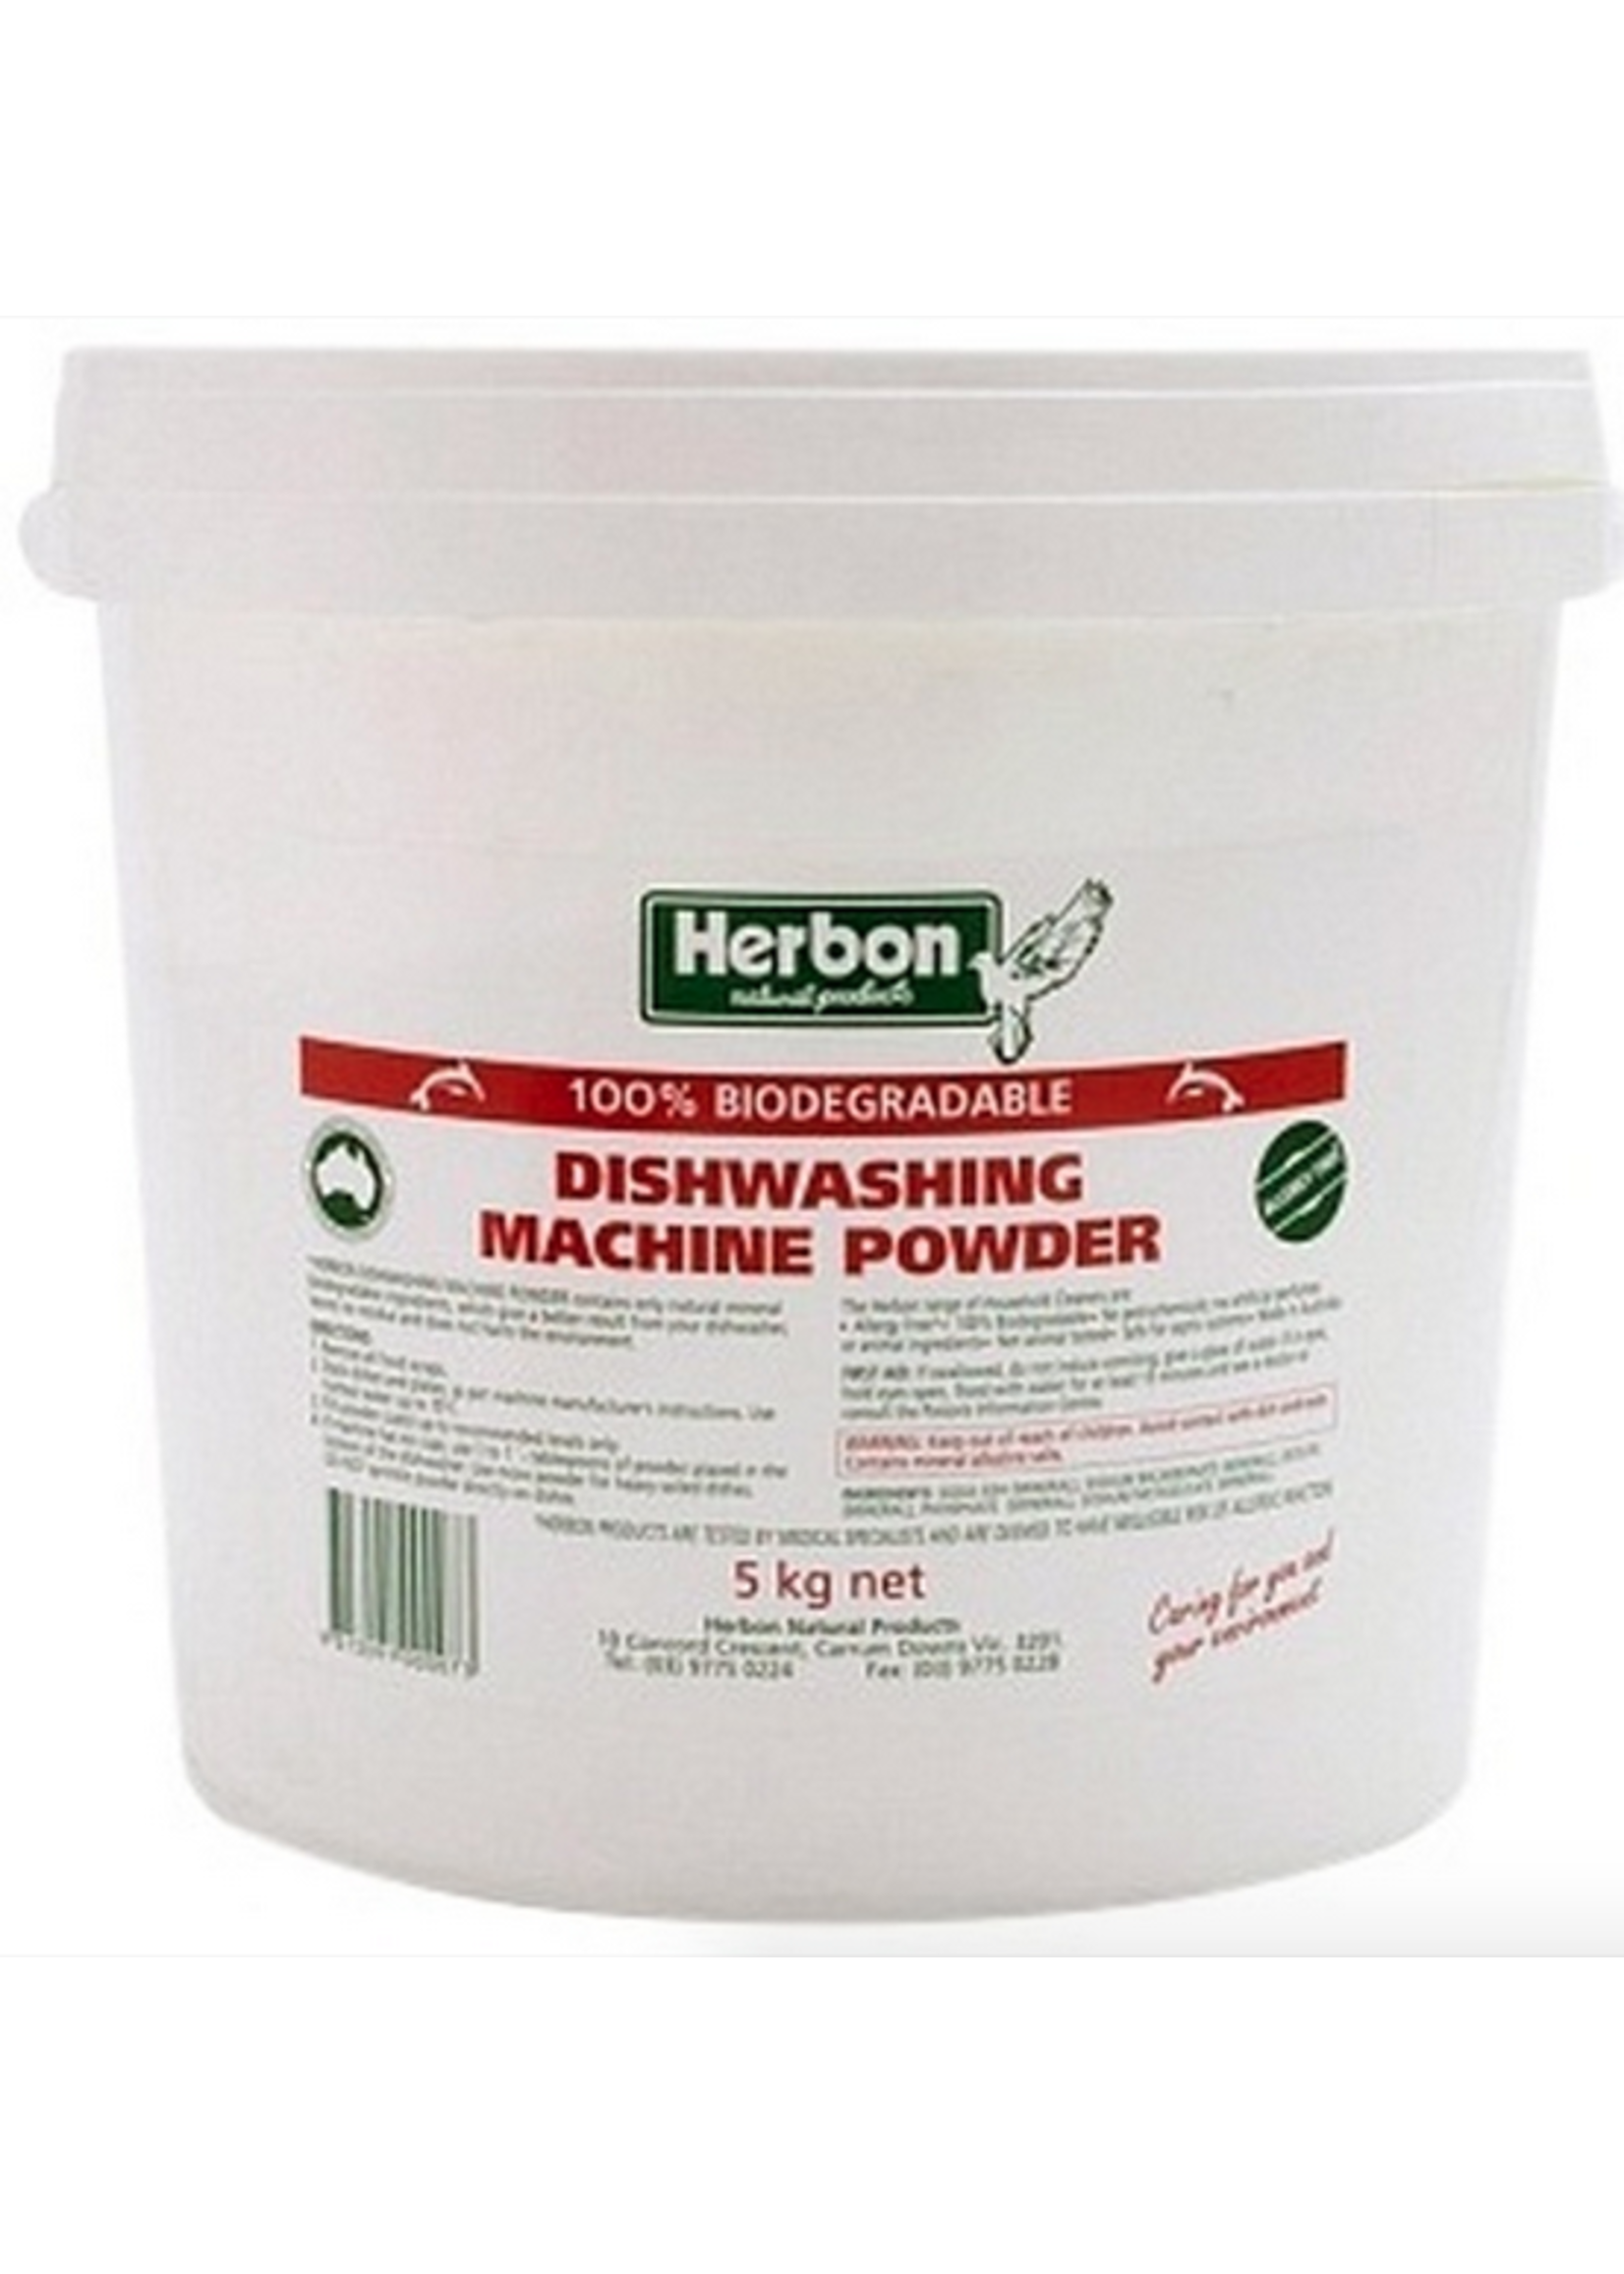 Herbon Herbon Dishwashing Machine Powder 5kg bulk pack